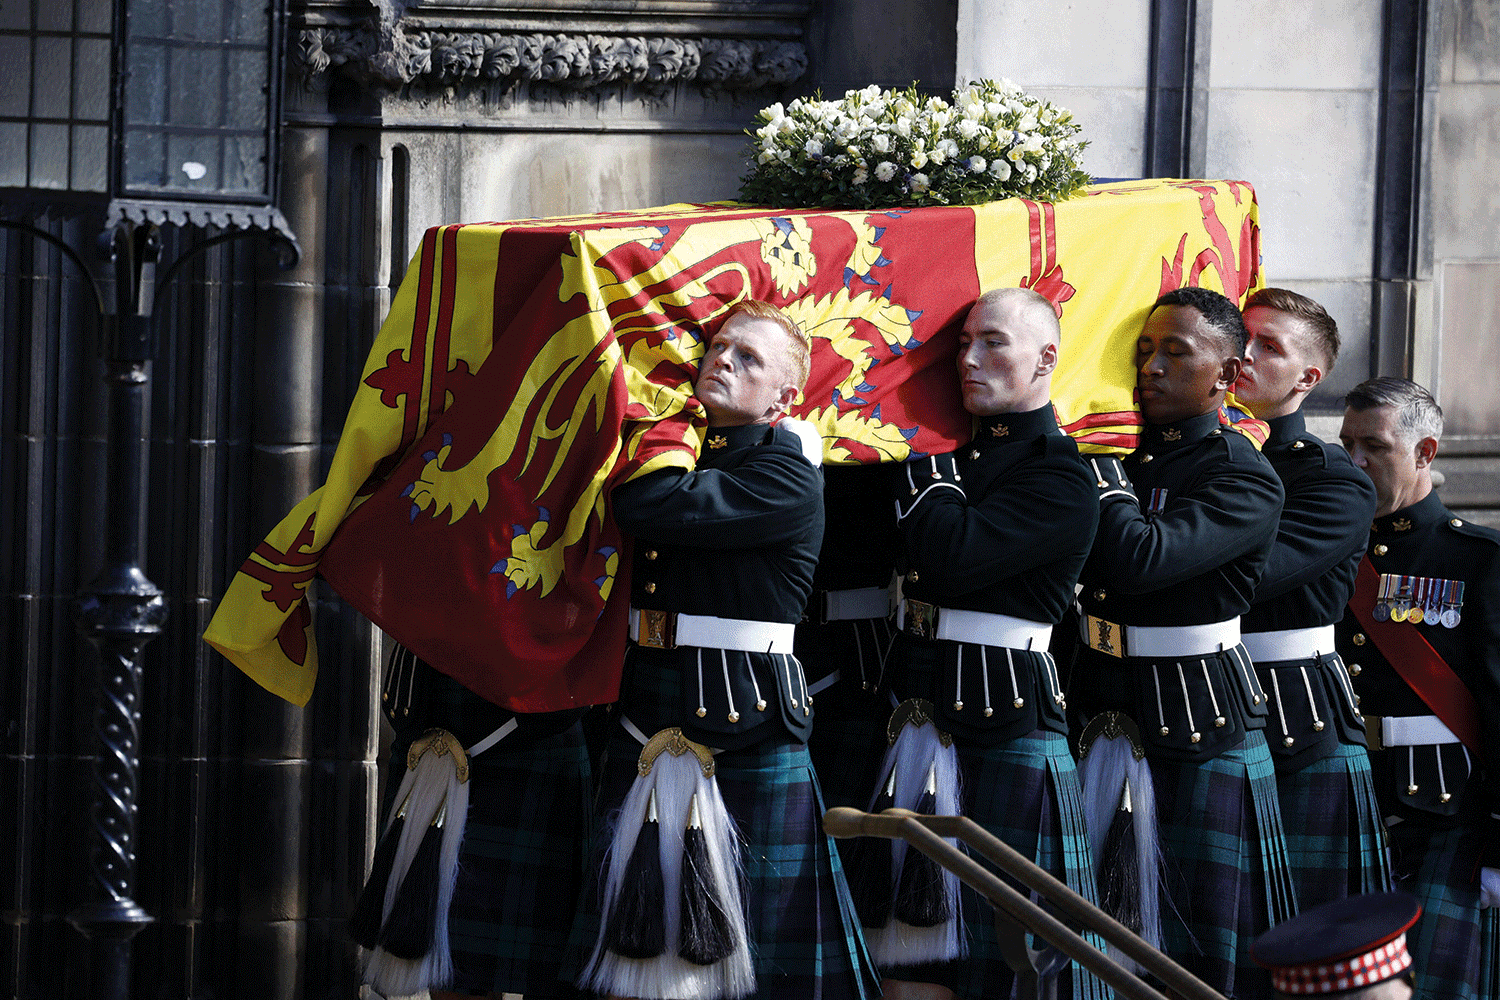 Guards carrying Queen's Elizabeth coffin